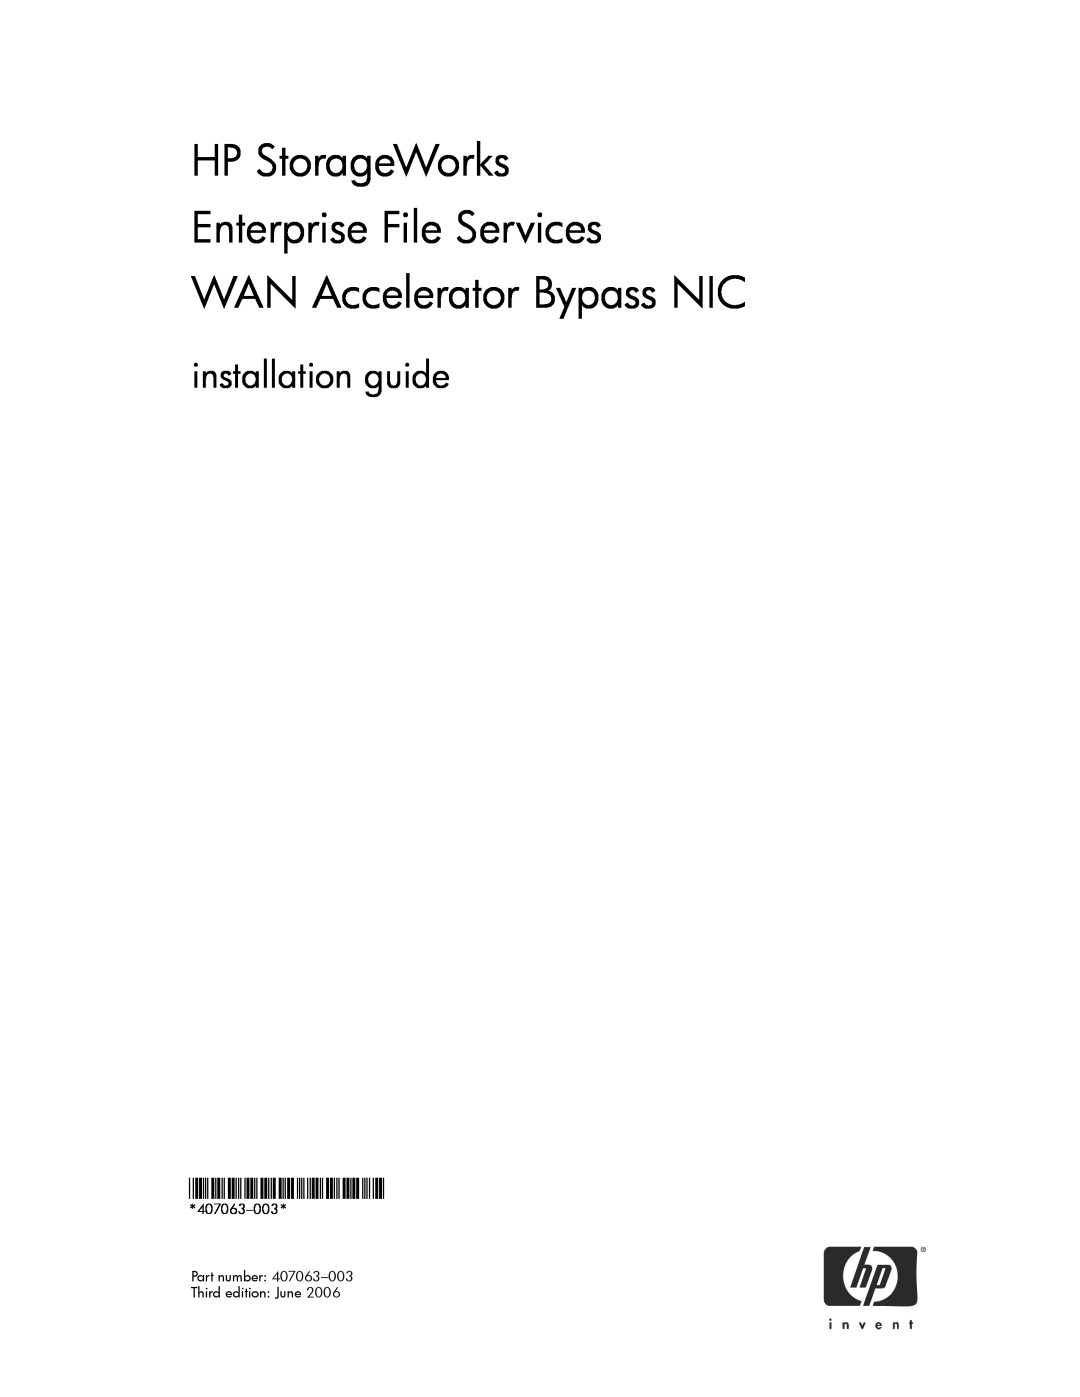 HP manual HP StorageWorks Enterprise File Services WAN Accelerator, 407118-001, deployment guide 